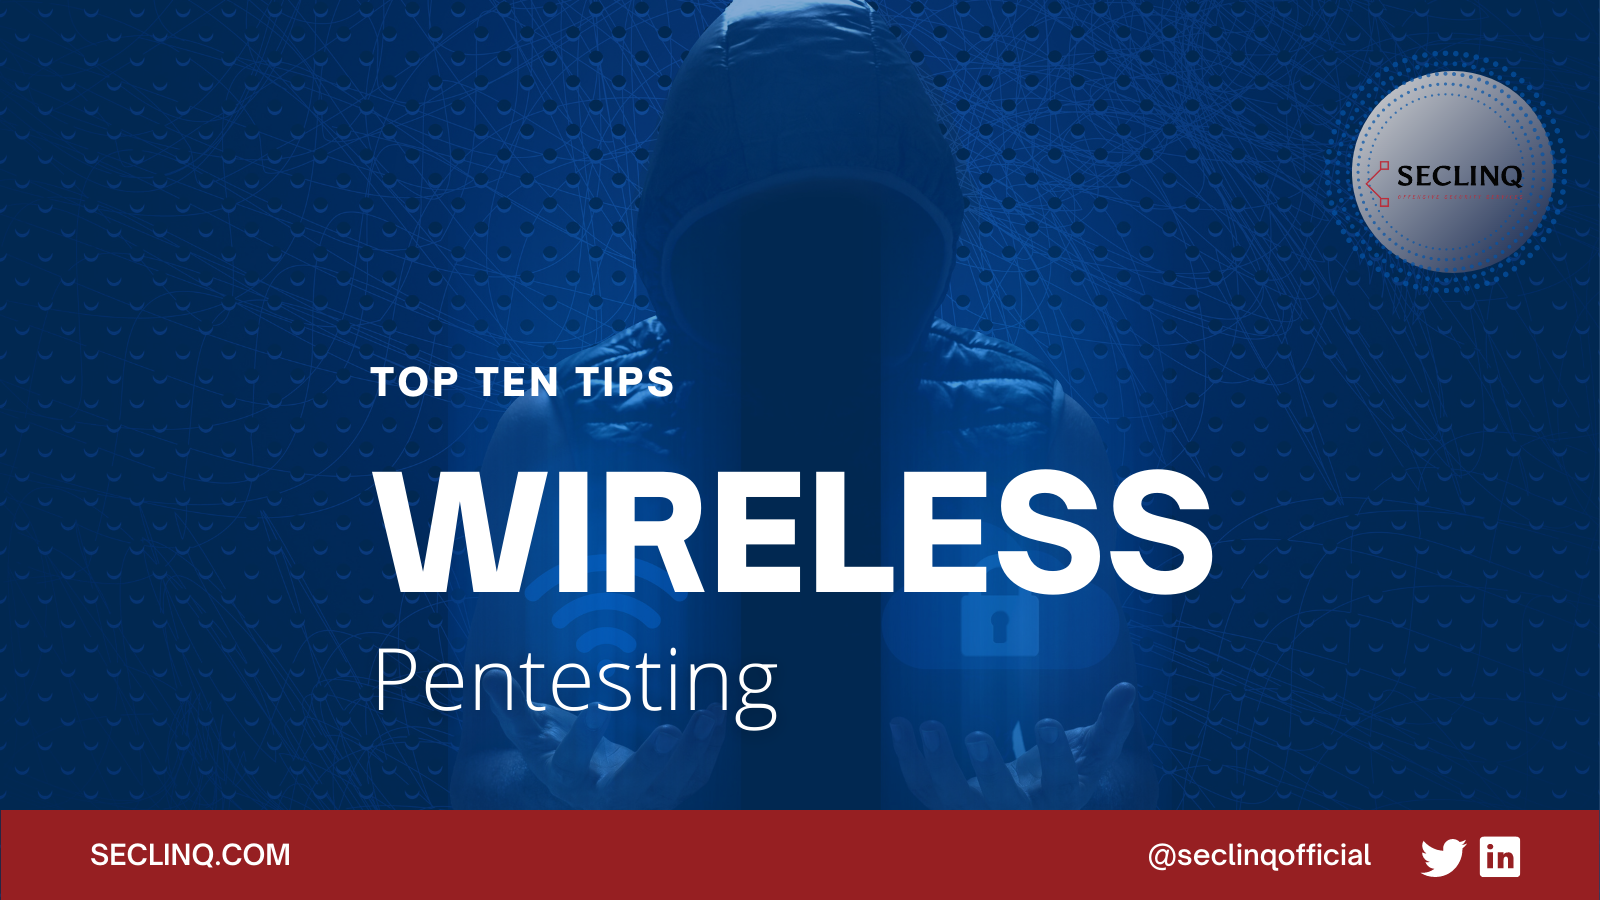 Top Ten Tips for Wireless Pentesting